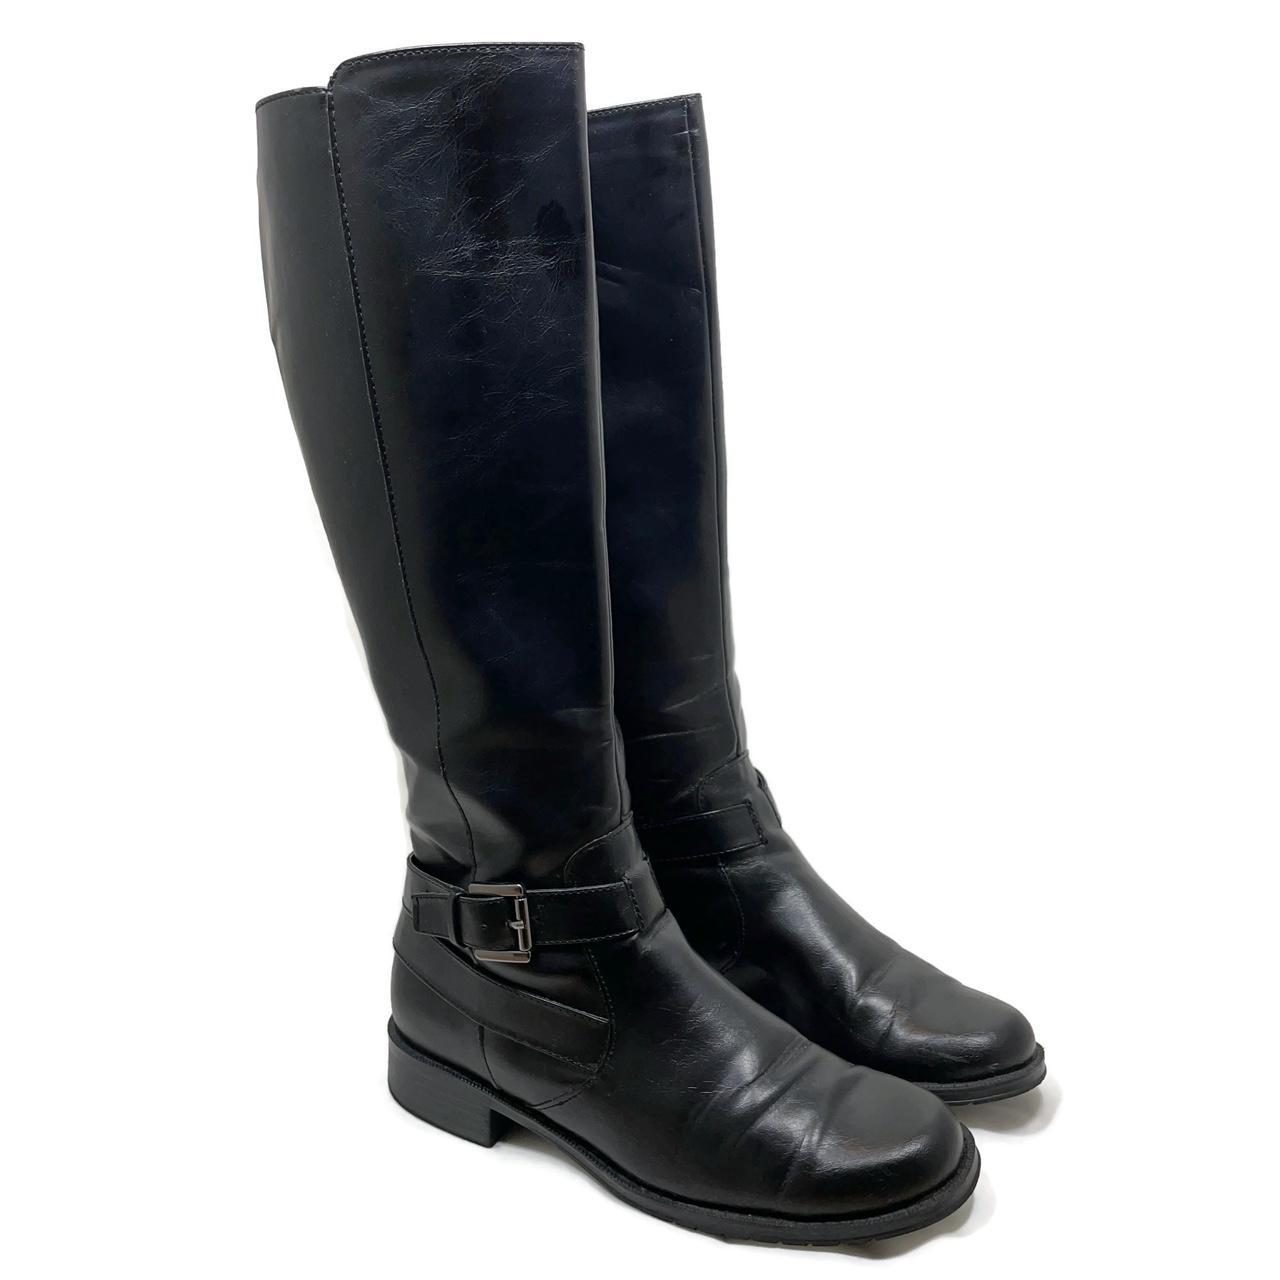 Aerosoles Women's Black Boots